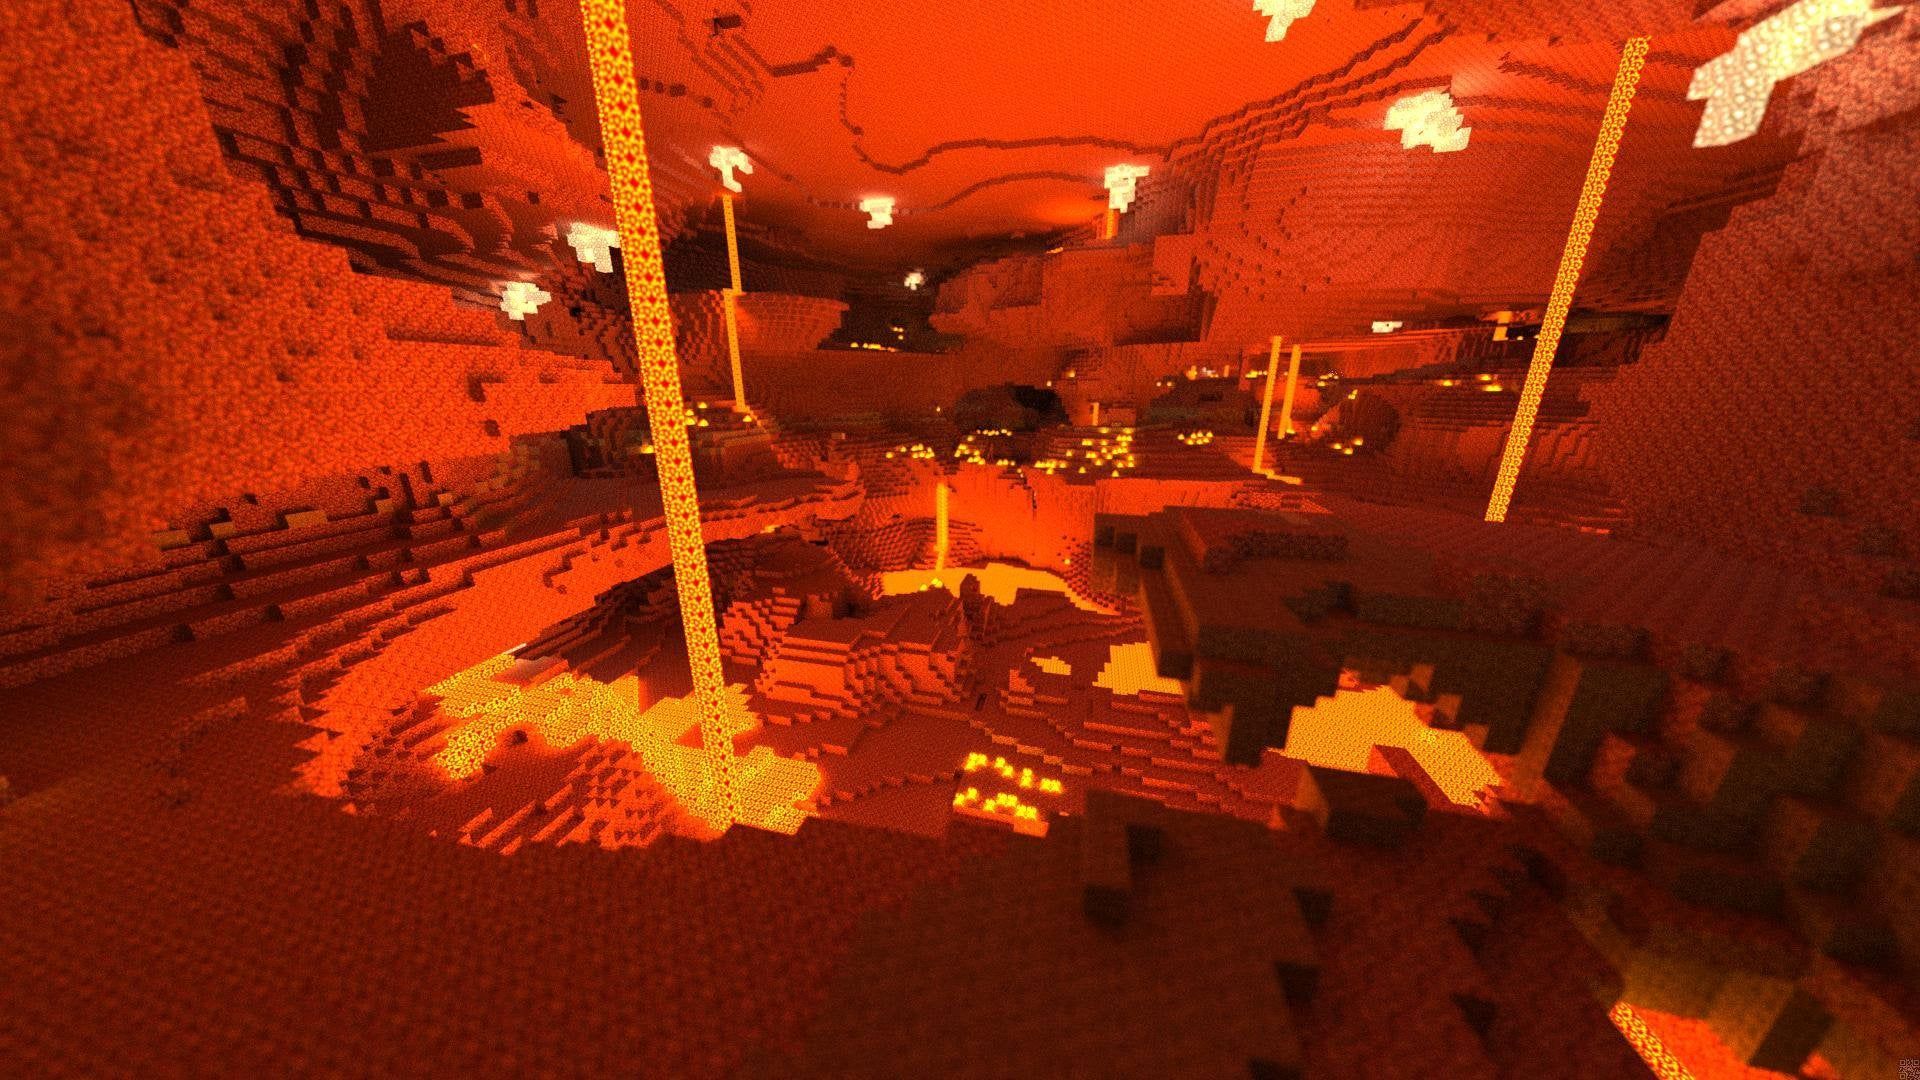 Minecraft's Nether Region: A Fiery Hot Gallery Experience